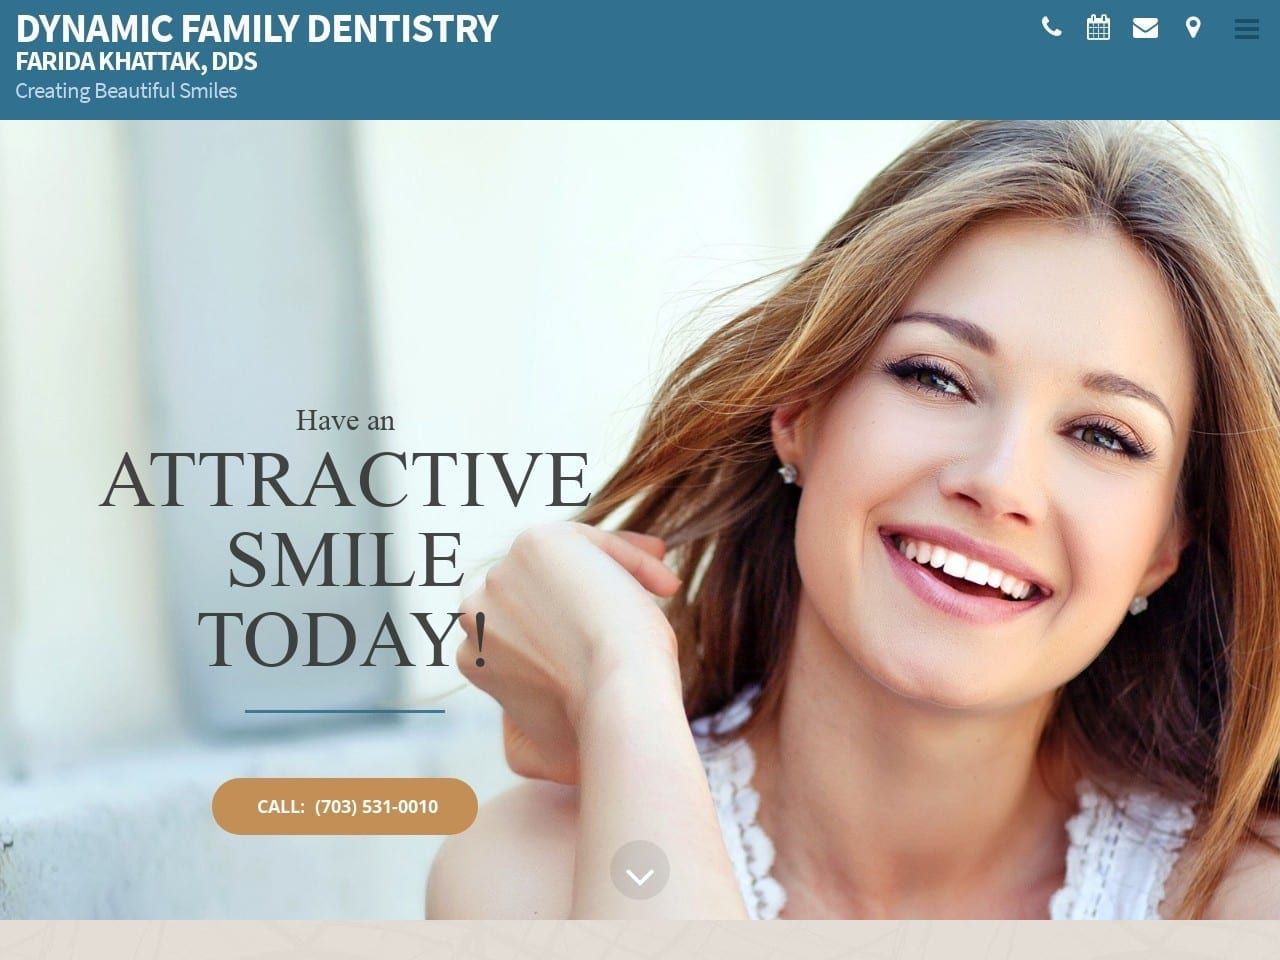 Dynamic Family Dentist Website Screenshot from dynamicfamilydentistry.com